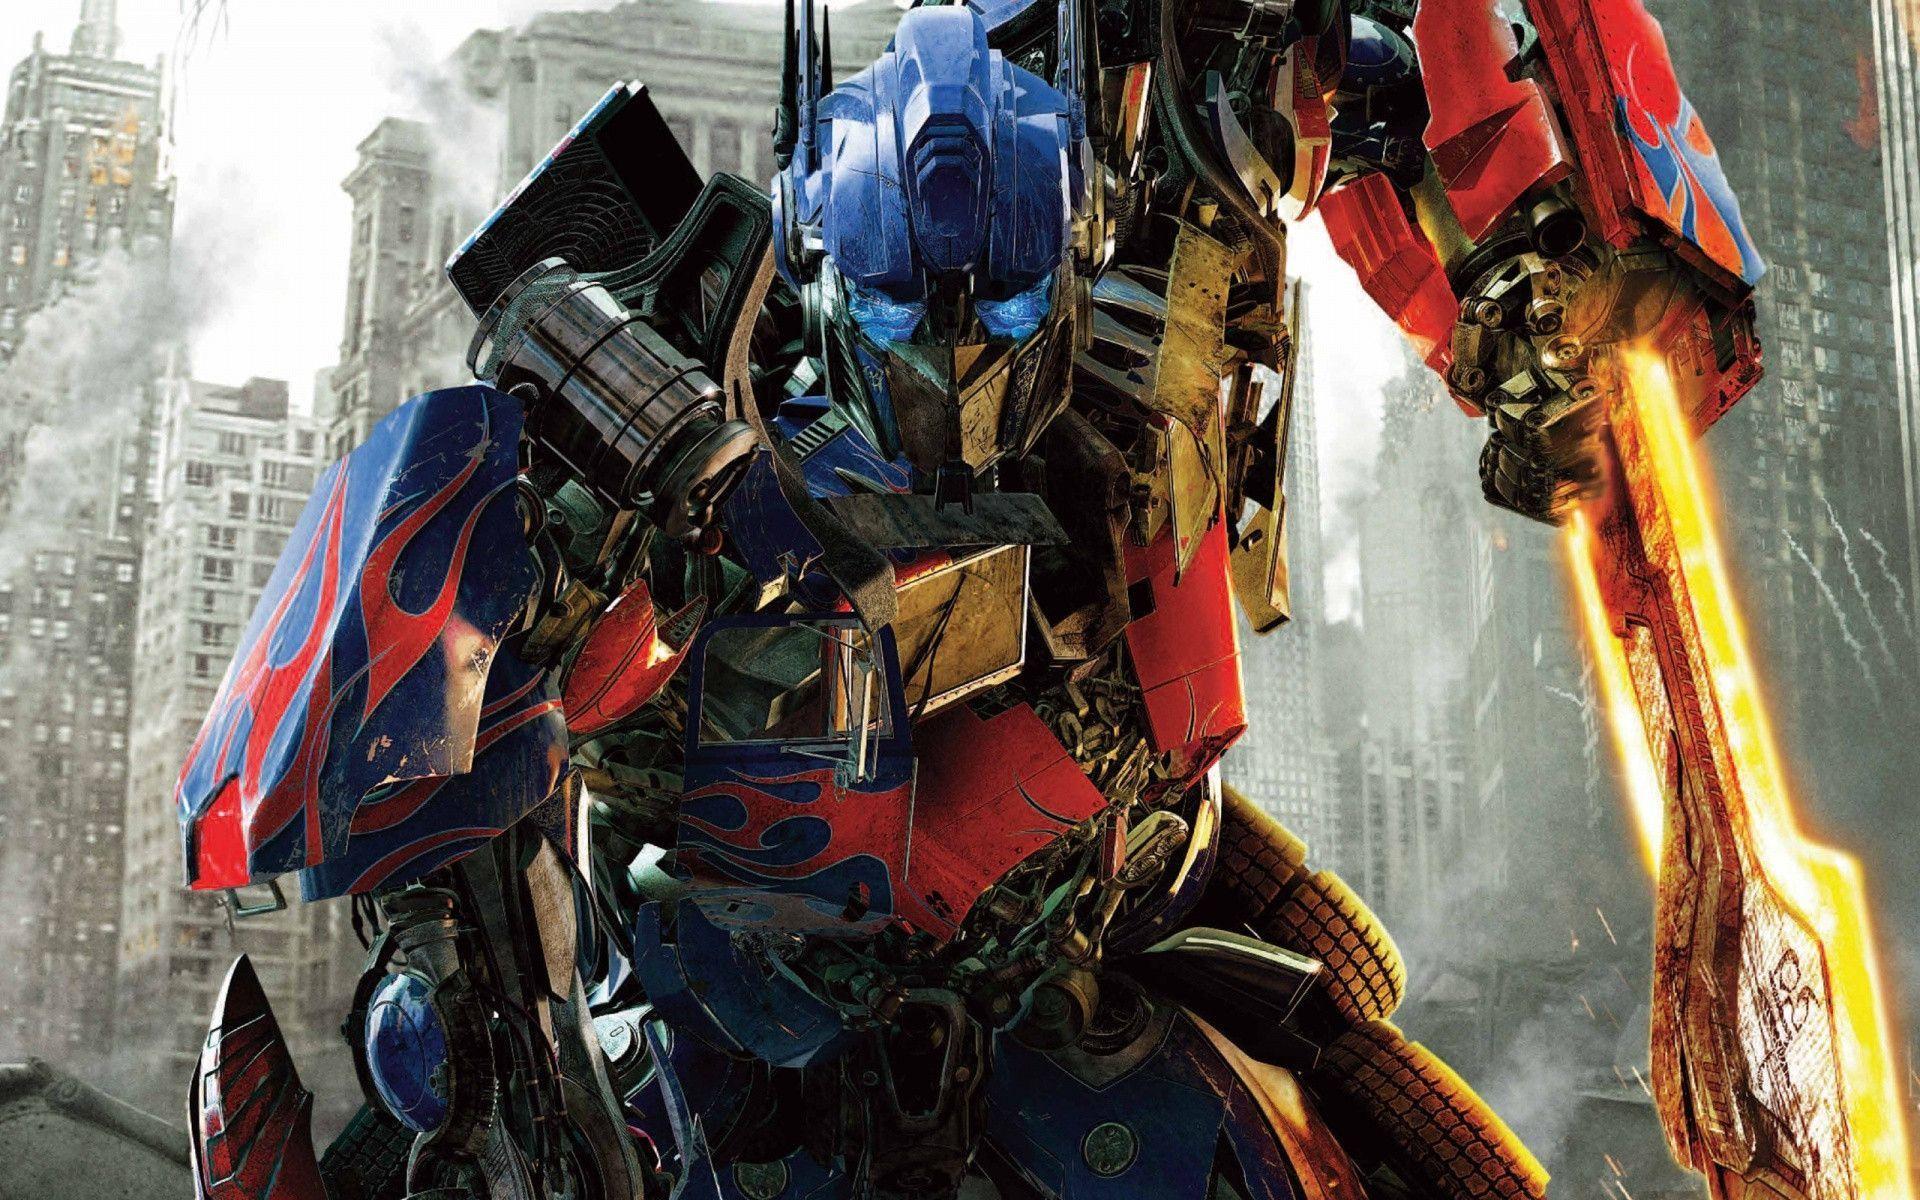 Transformers 2 Optimus Prime Wallpaper. Optimus prime wallpaper, Transformers movie, Transformers optimus